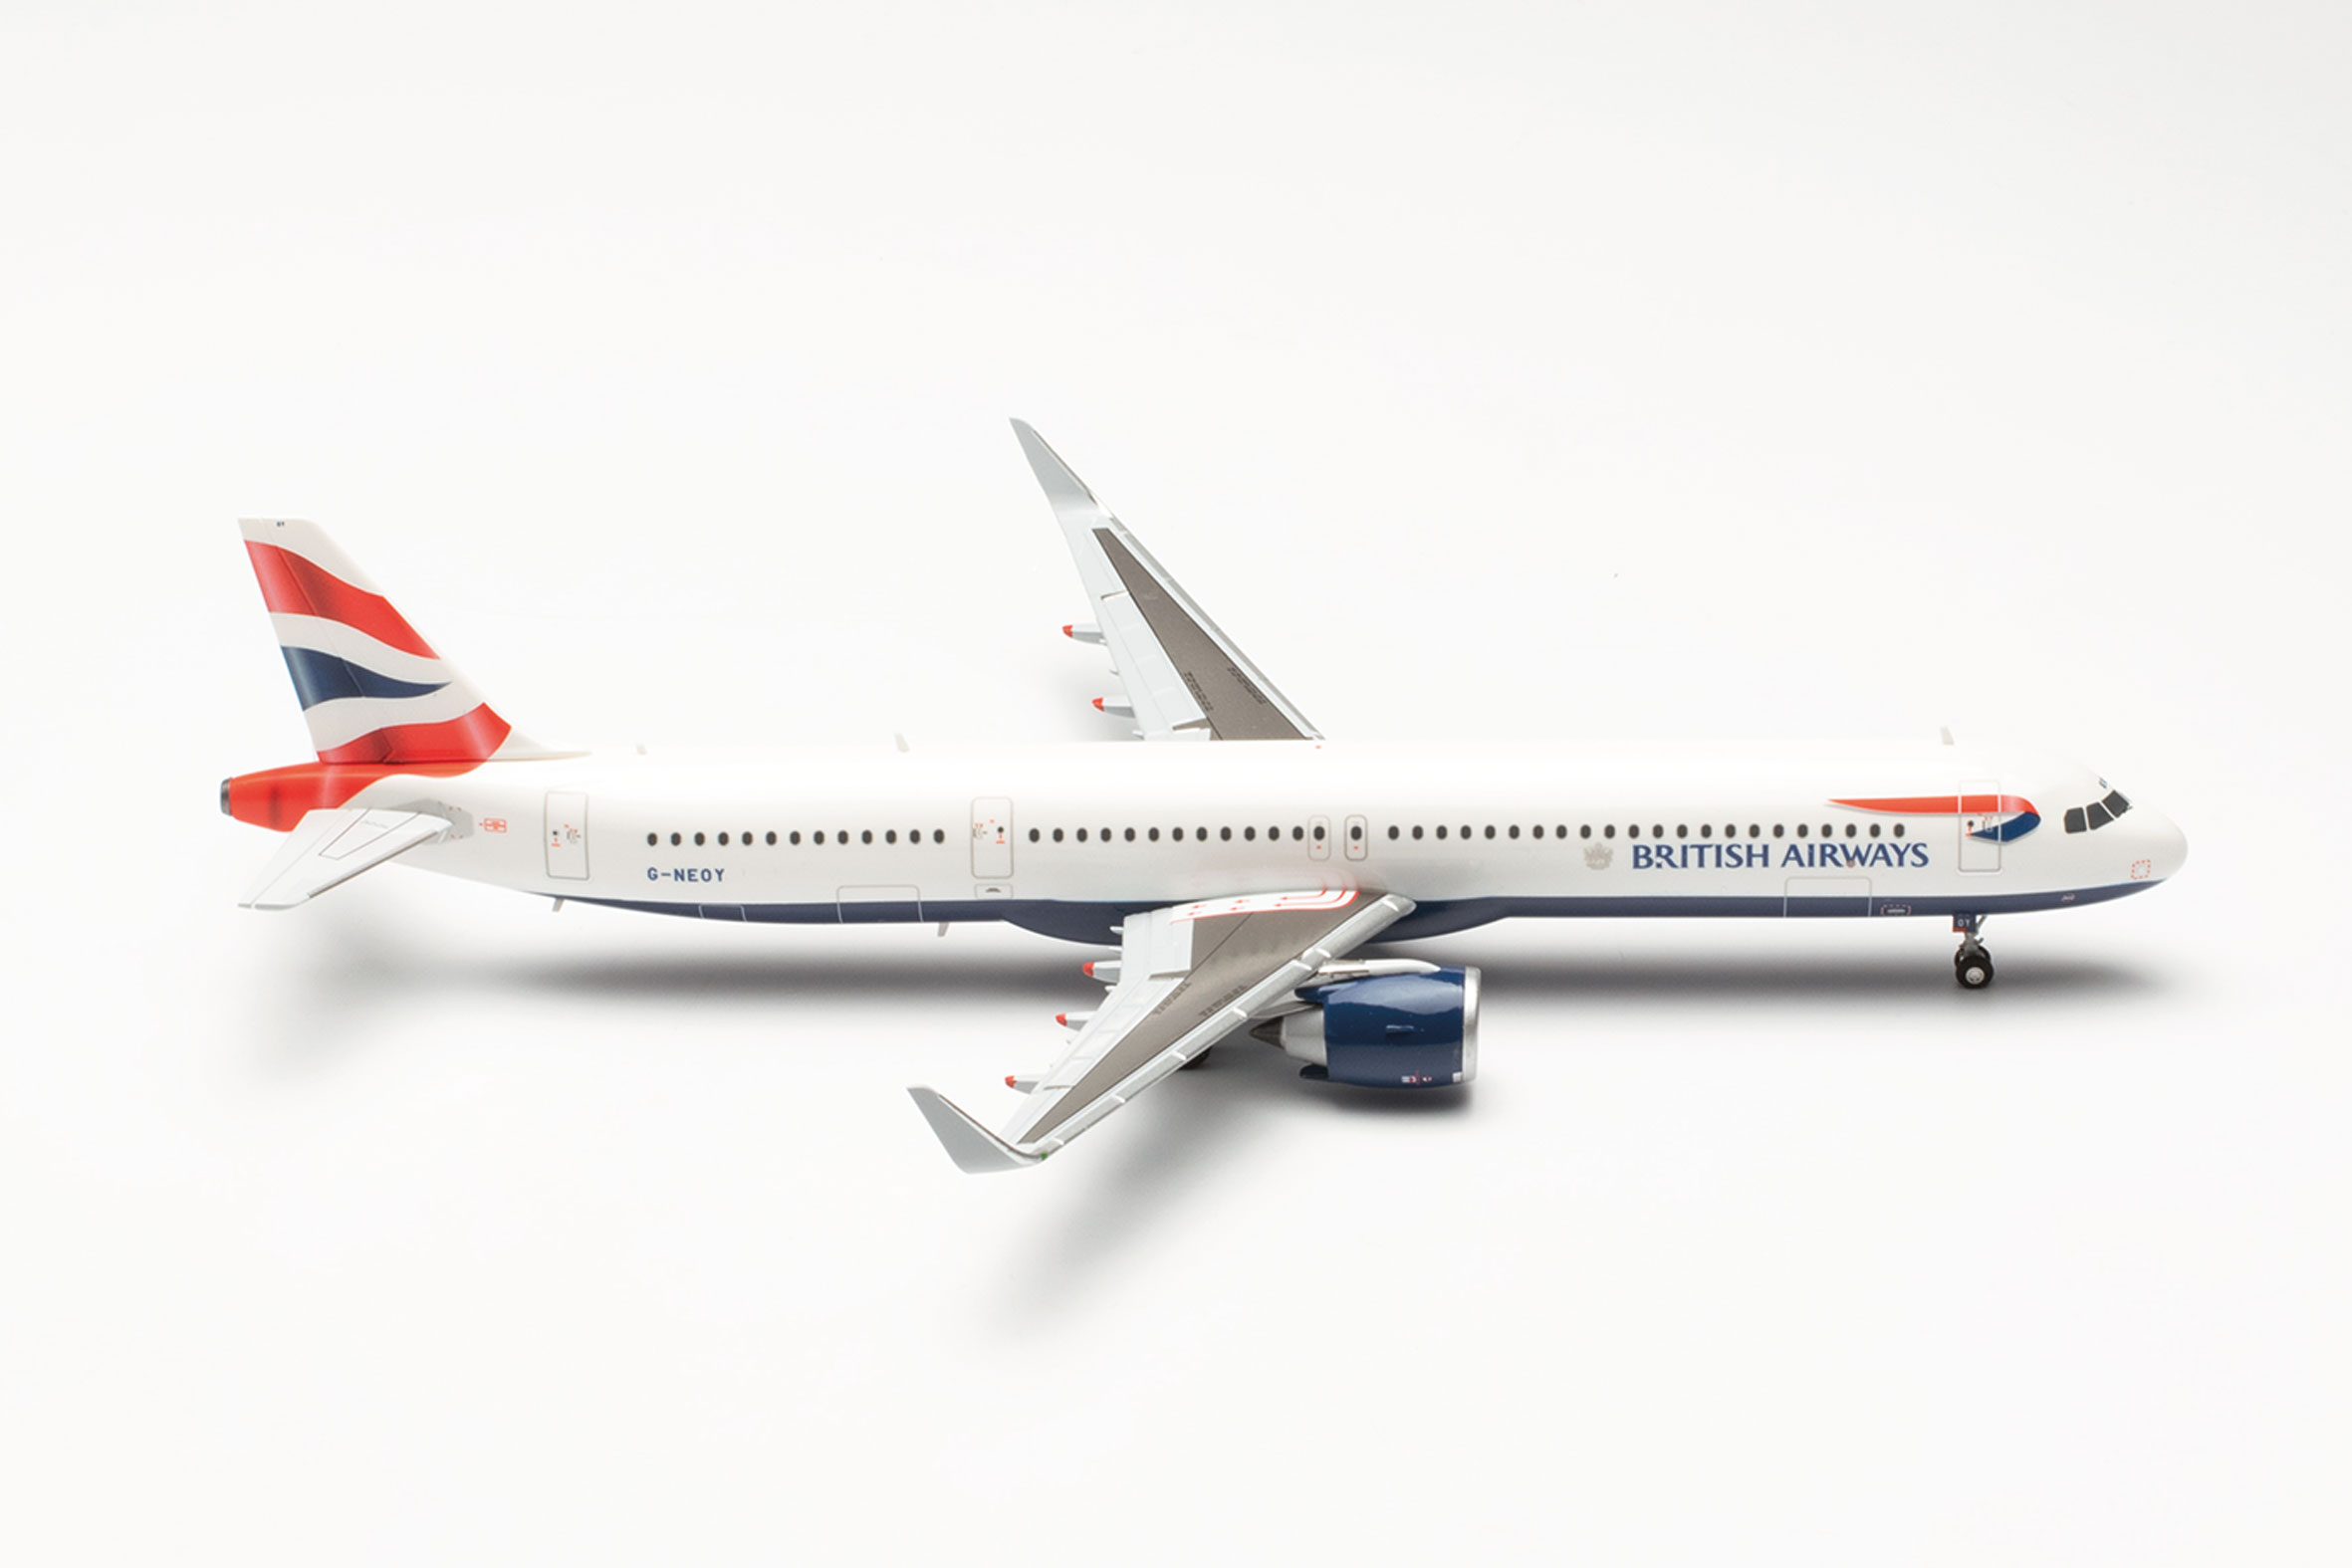 British Airways Airbus A321neo – Reg.: G-NEOY